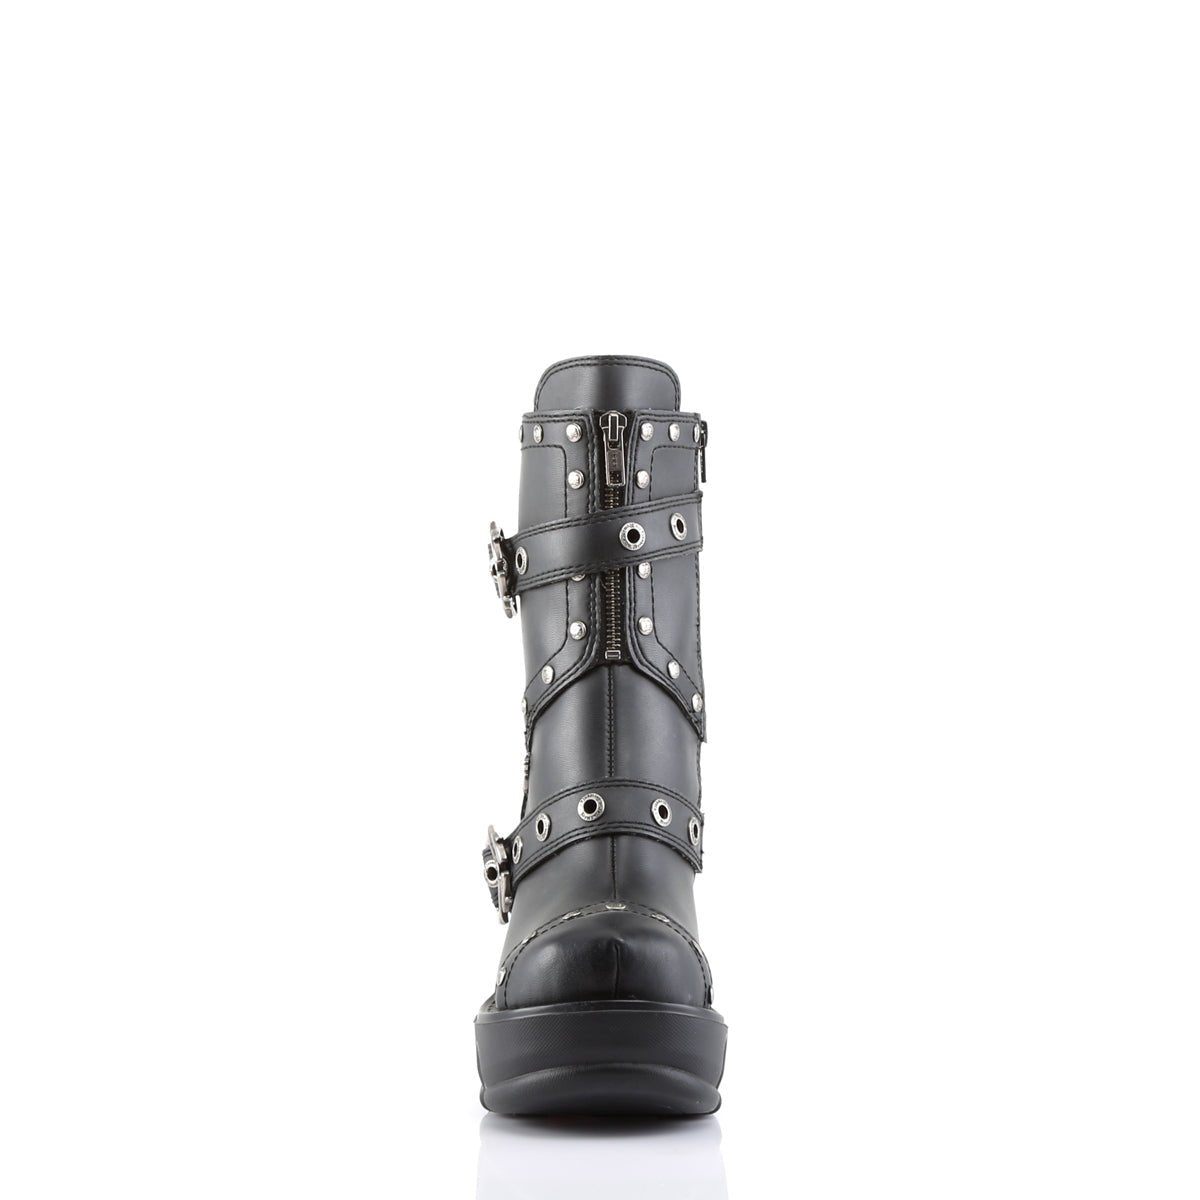 Too Fast | Demonia Sinister 201 | Black Vegan Leather Women's Mid Calf Boots